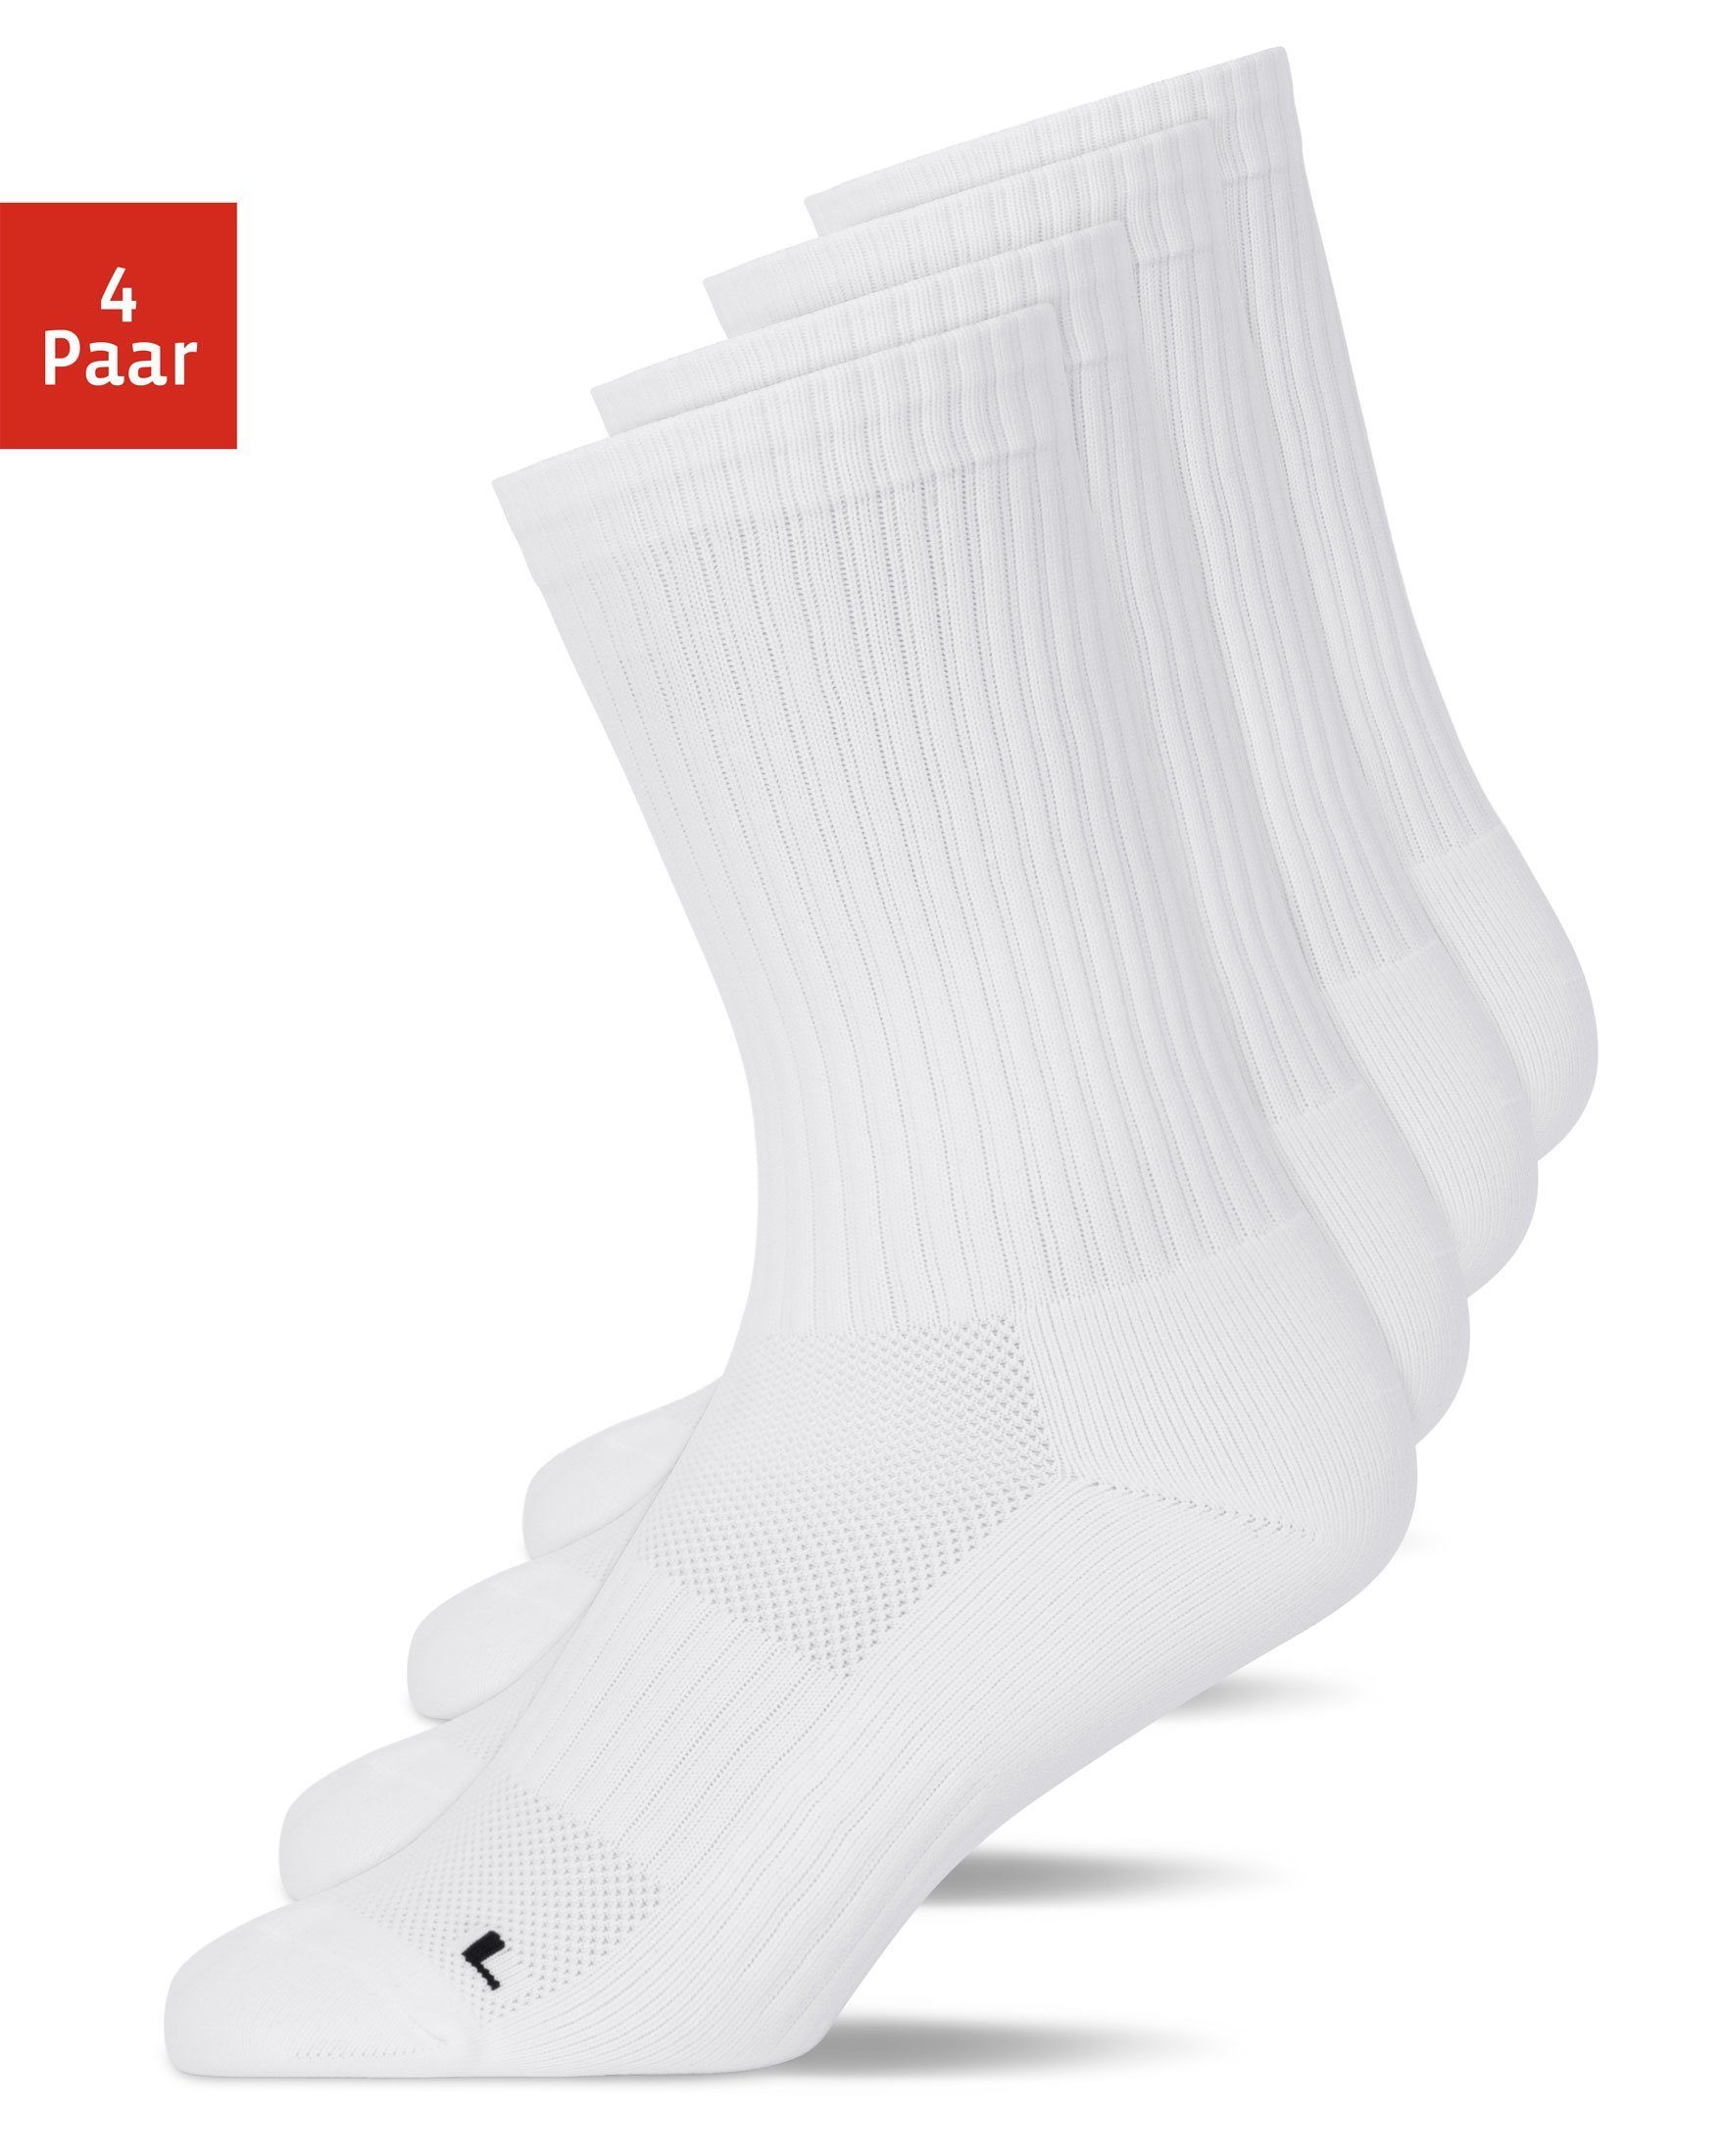 10-20 Paar Sportsocken Tennissocken dicke Qualität weiße Unisex Socken kochfest 